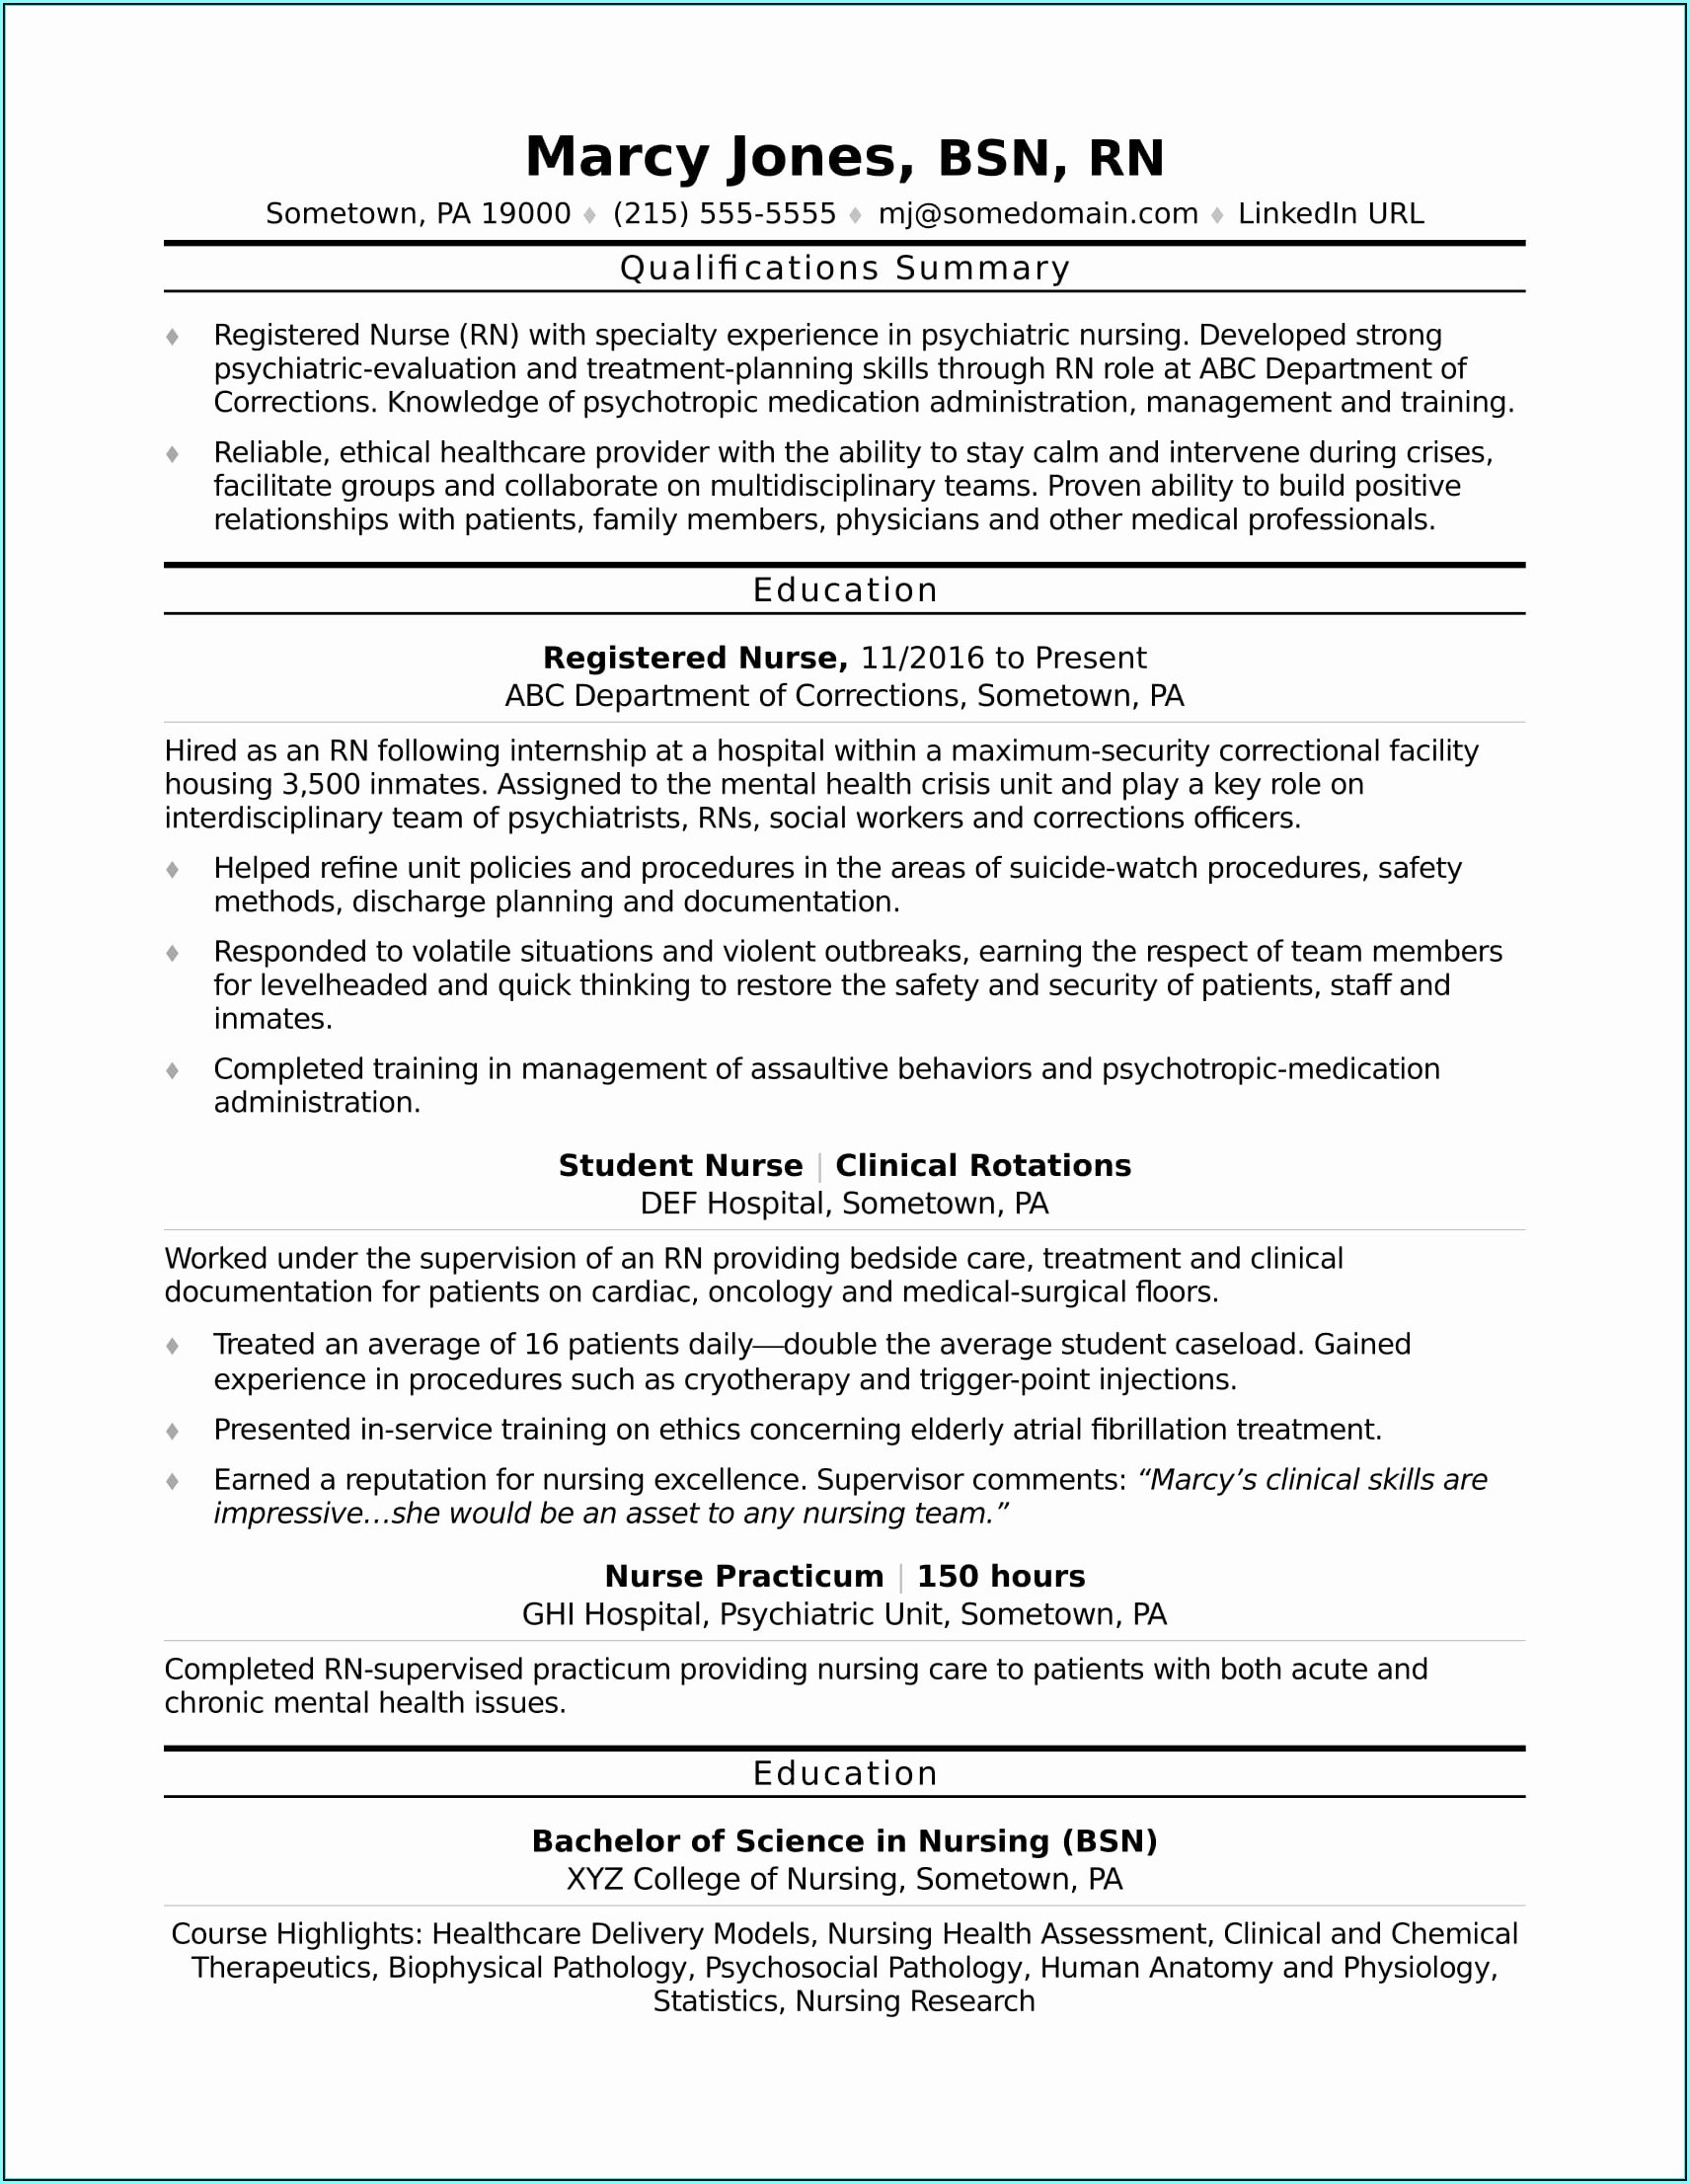 Resume Template For Nursing School Application